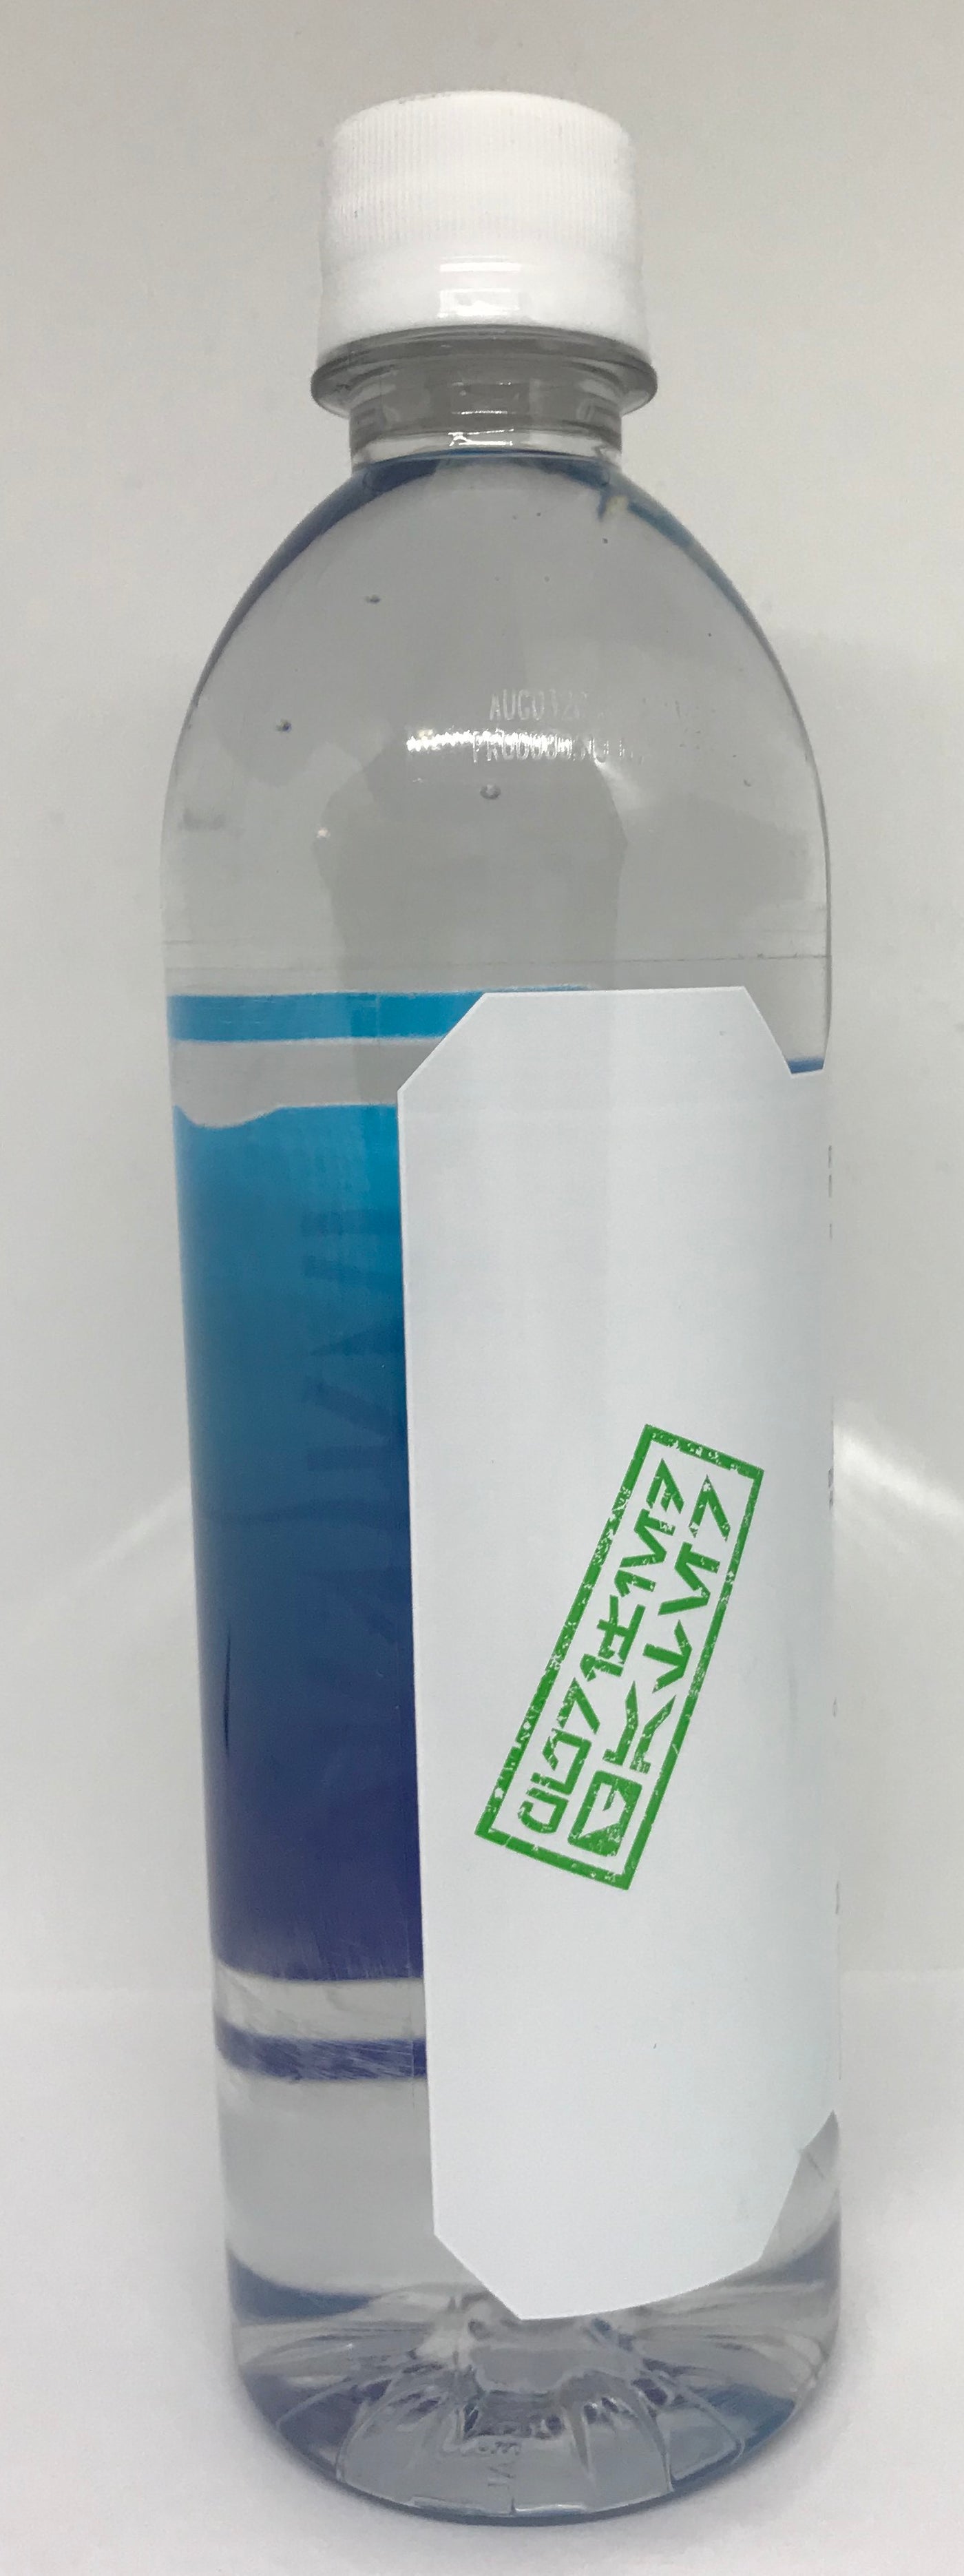 Disney Parks Dasani Water Star Wars Galaxy Edge 20 Oz Bottle Plastic New